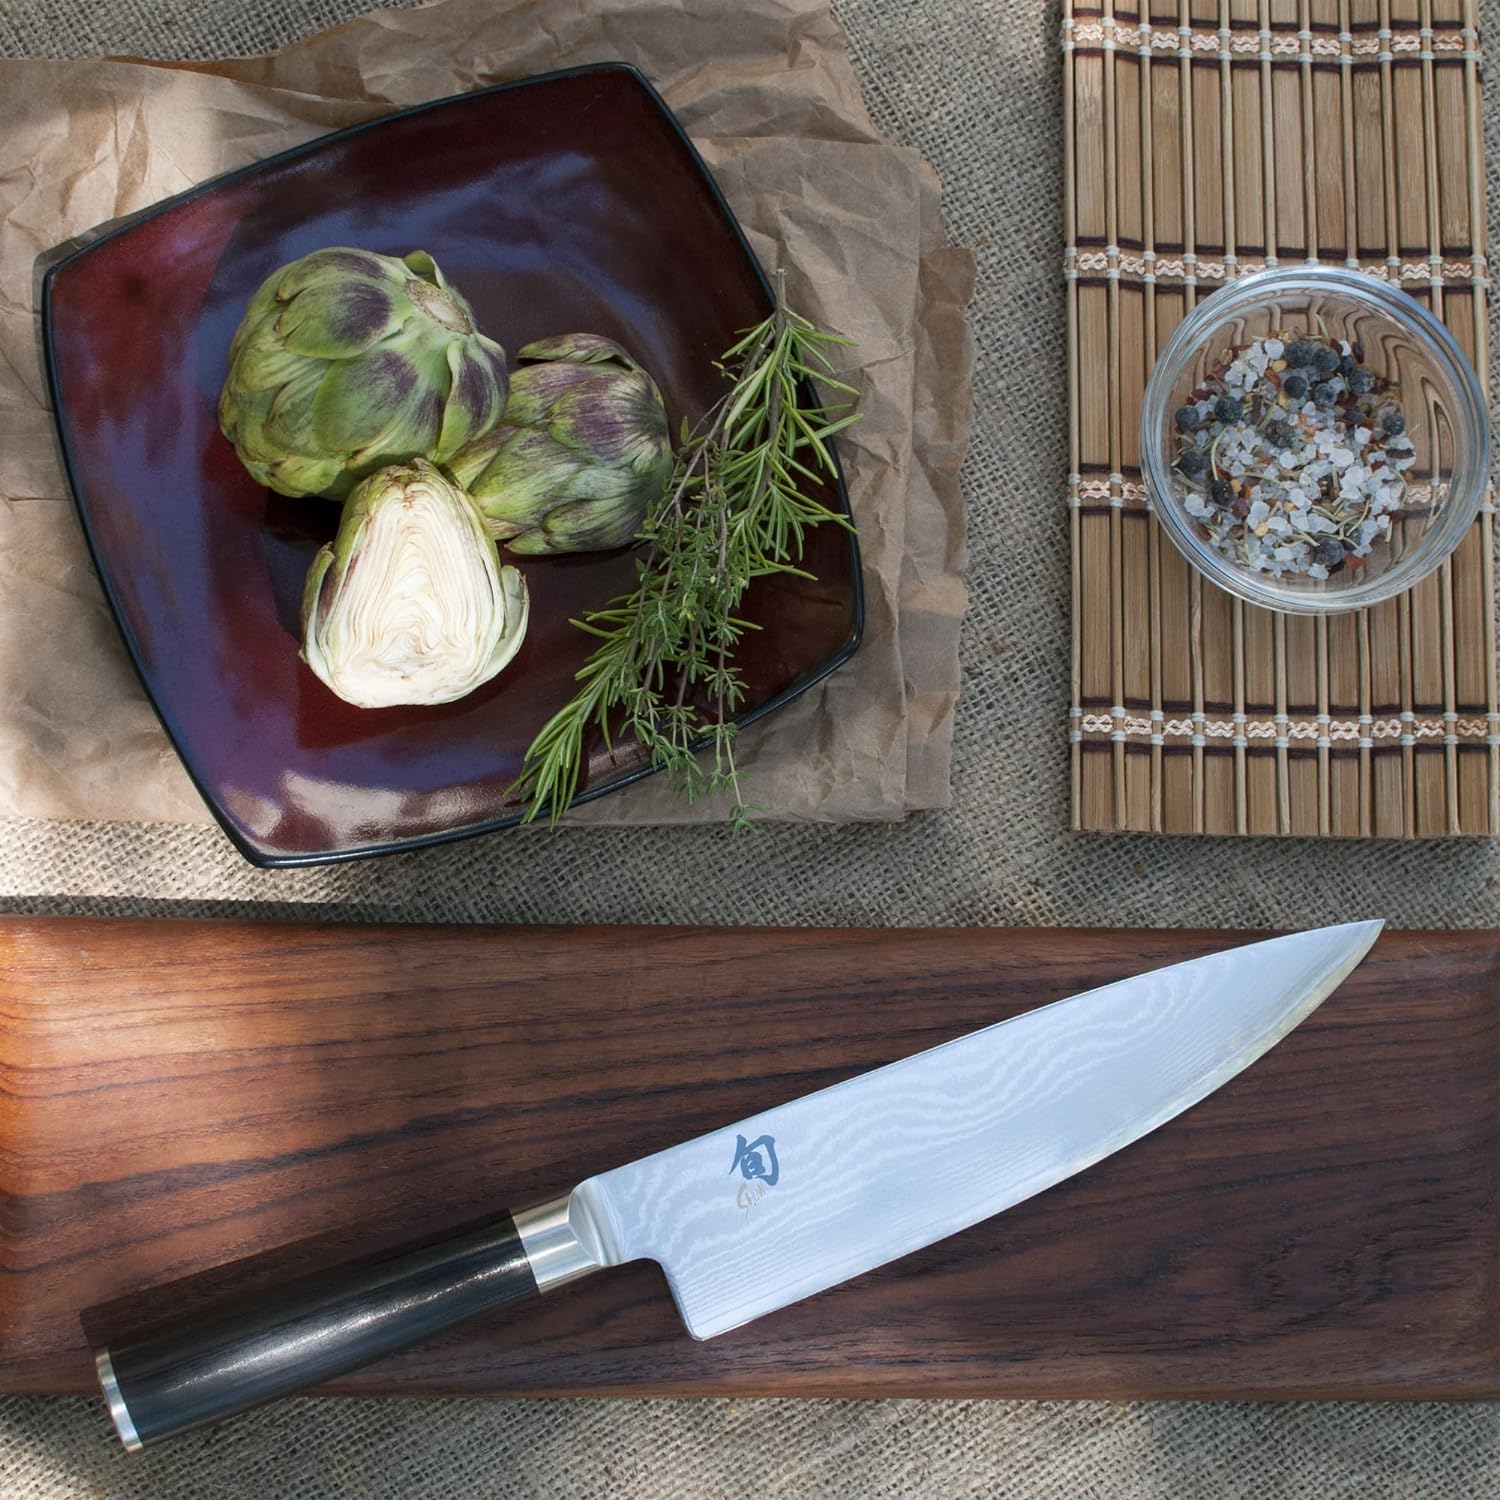 2. Shun Classic 8-Inch Chef's Damascus Knife With PakkaWood Handle